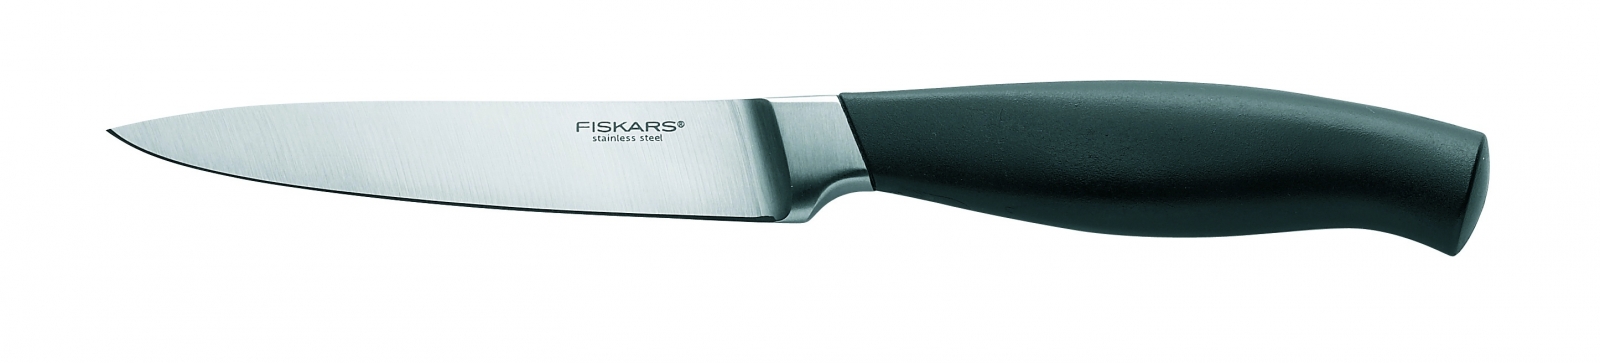 Nóż kuty do obierania Solid Functional Form Pro 857303 Fiskars